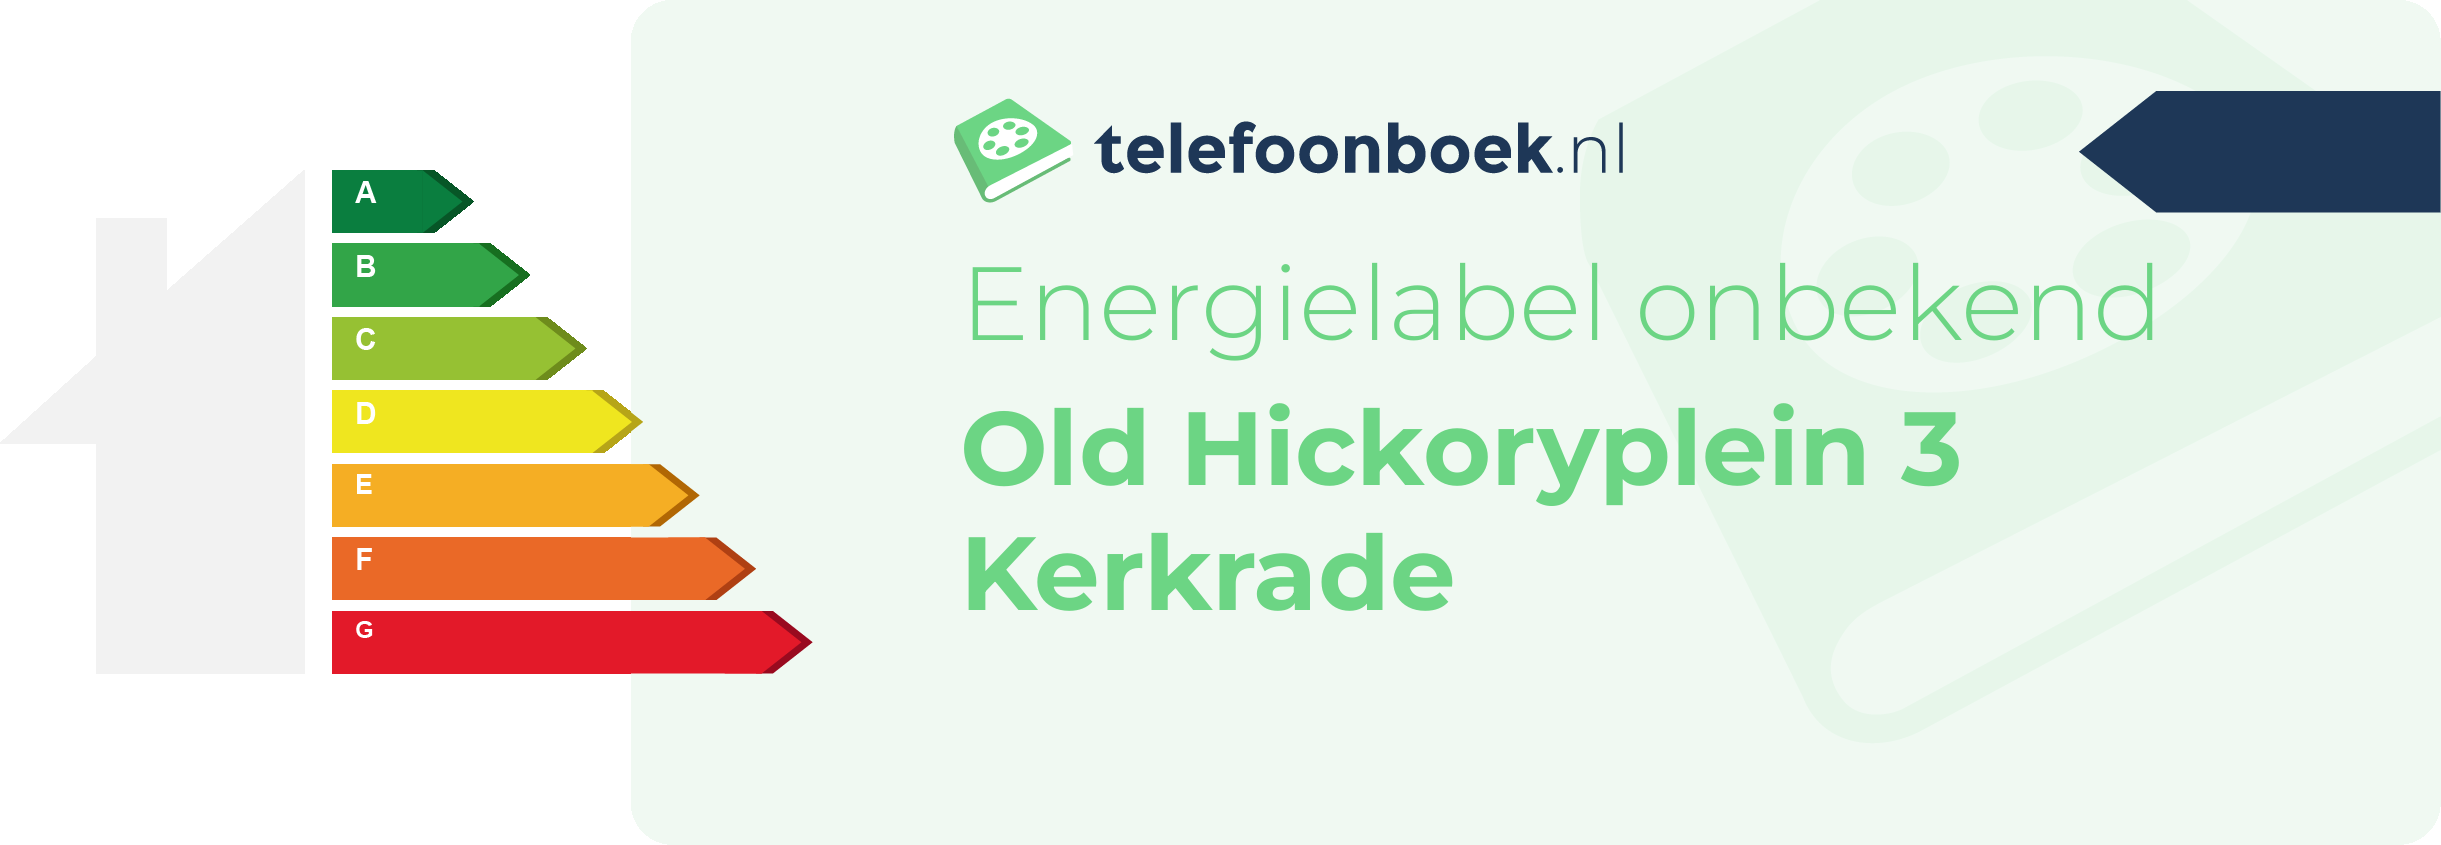 Energielabel Old Hickoryplein 3 Kerkrade